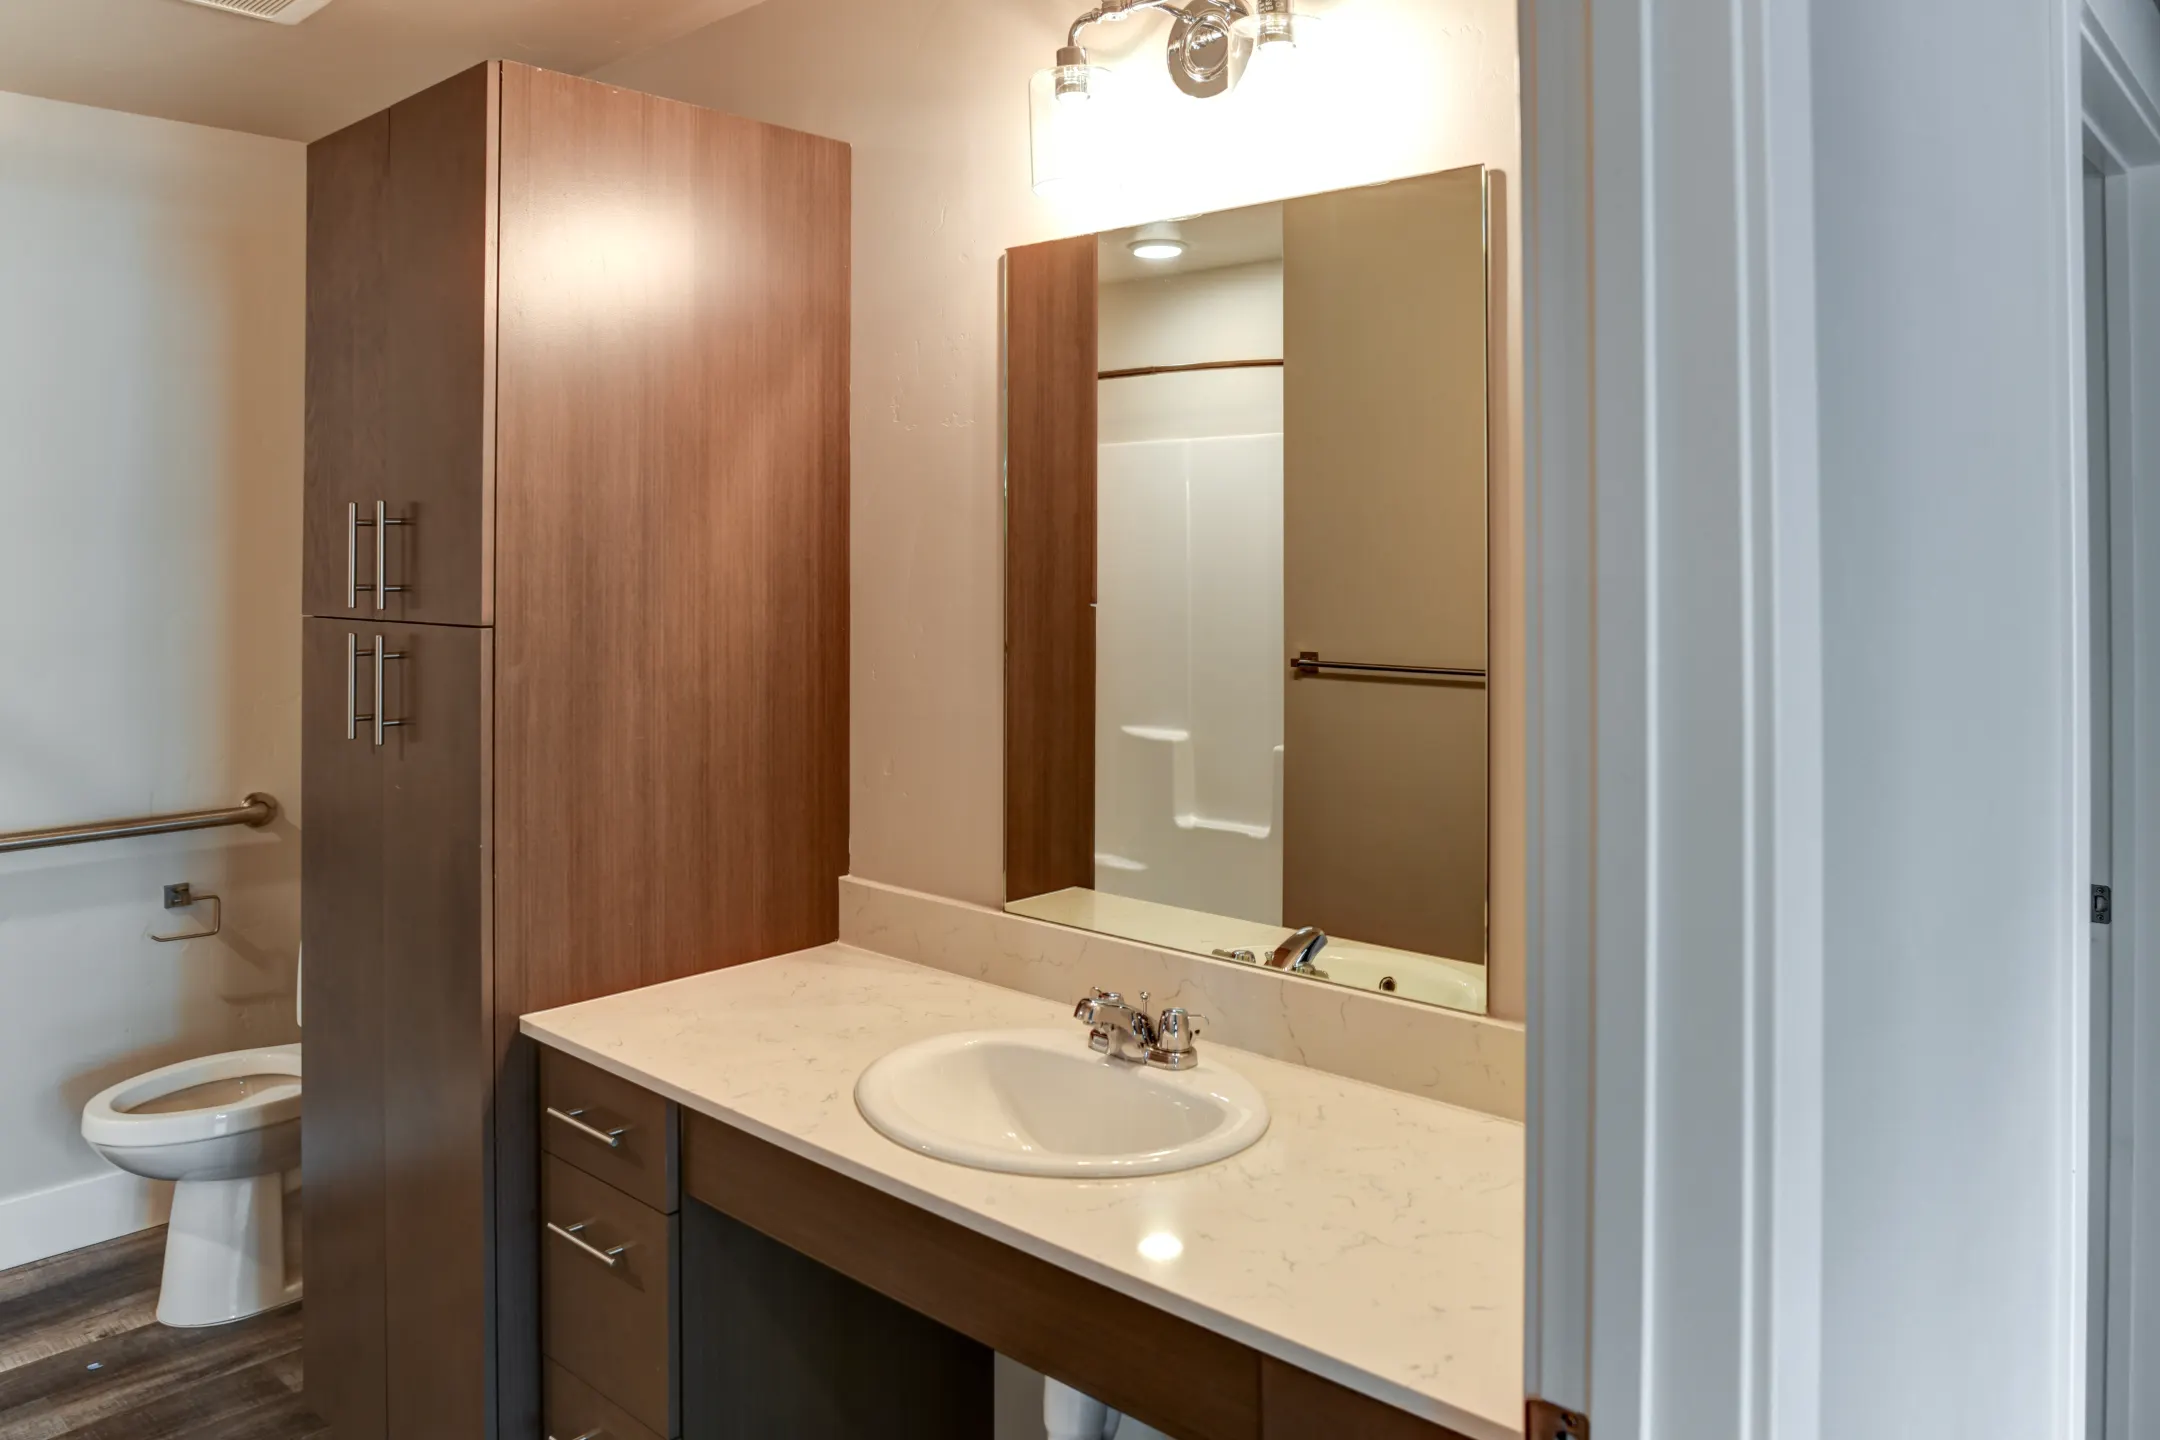 Bathroom - Whitefish Apartment Homes - Whitefish, MT